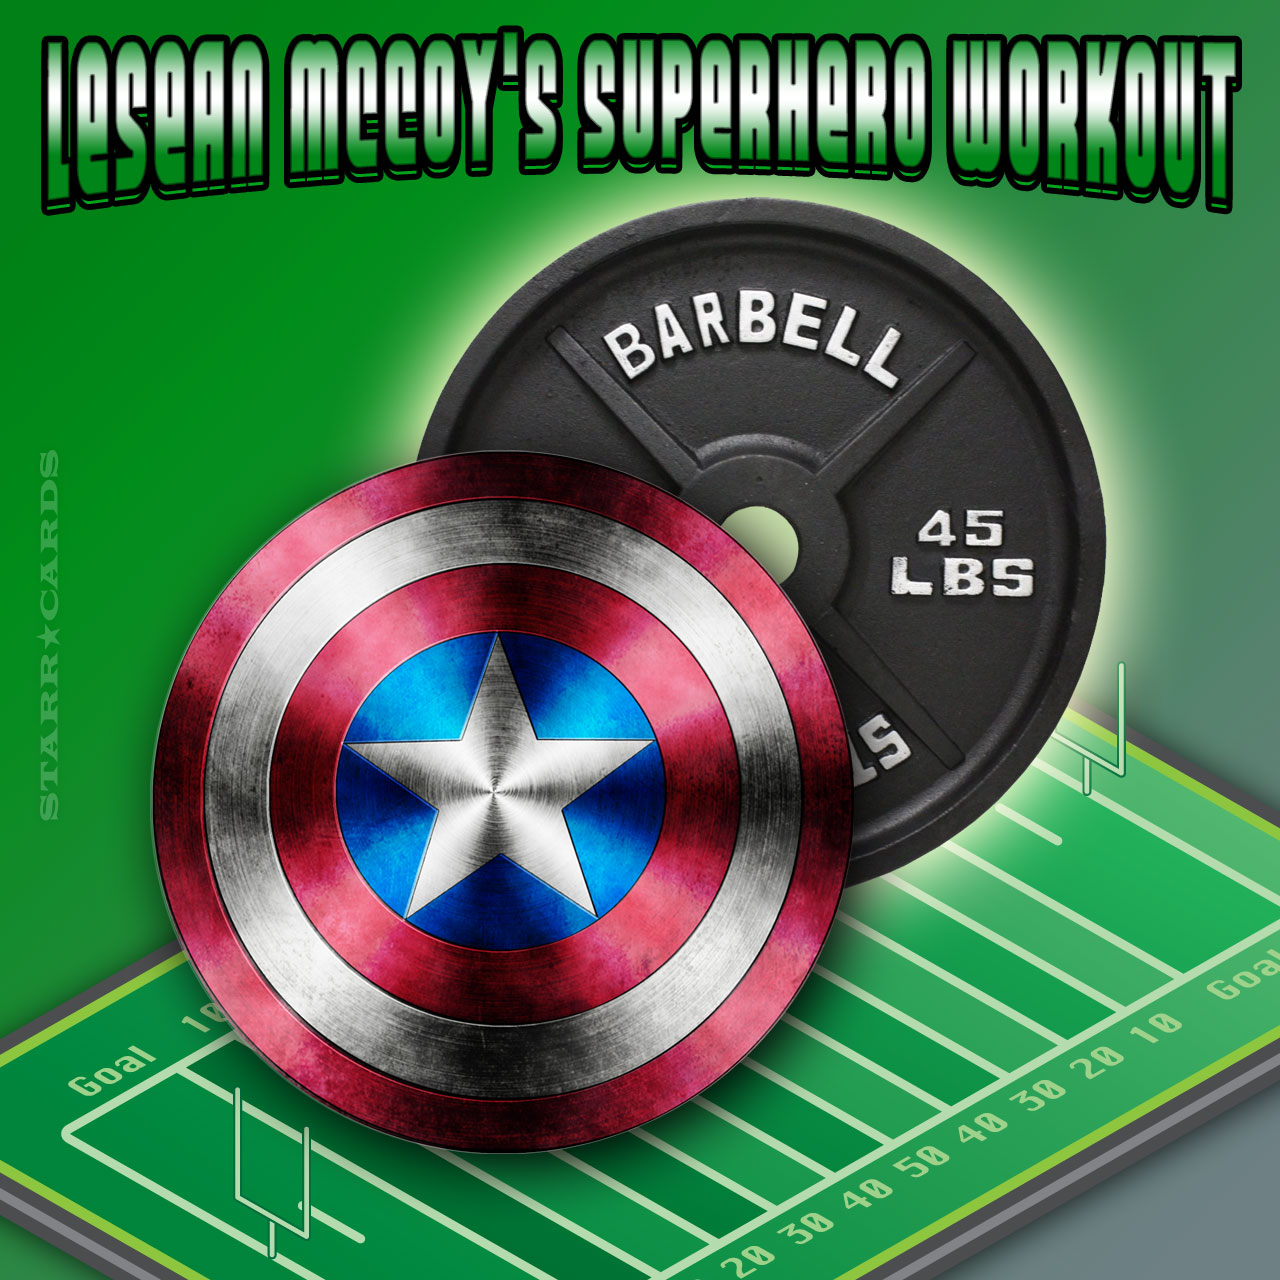 LeSean McCoy's superhero workout